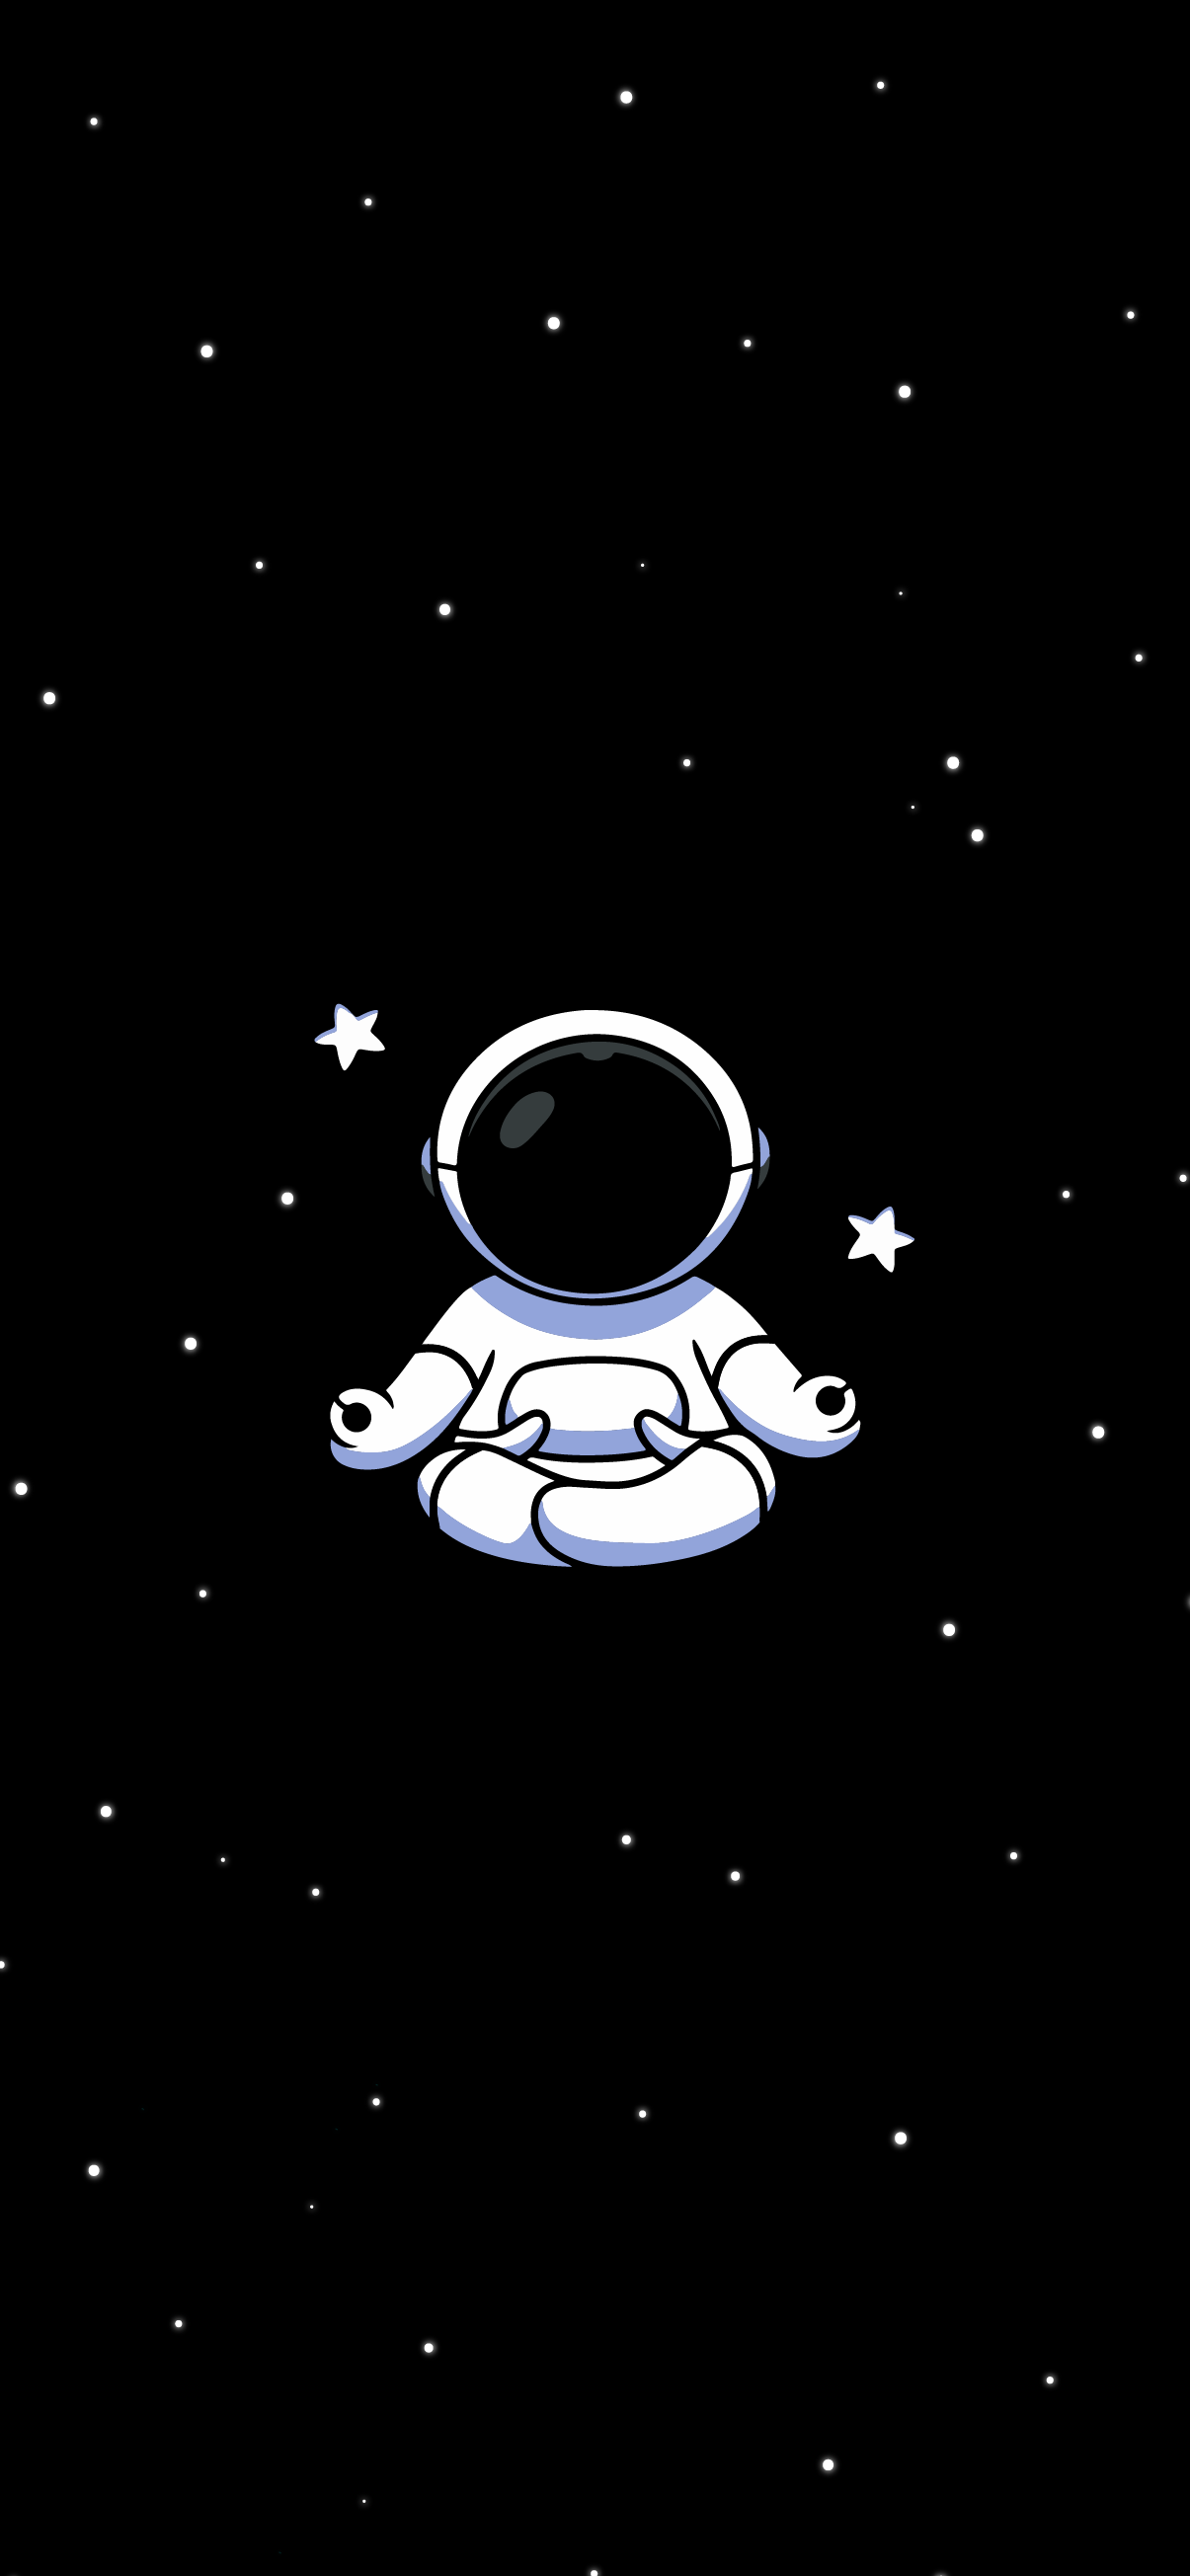 astronaut black background